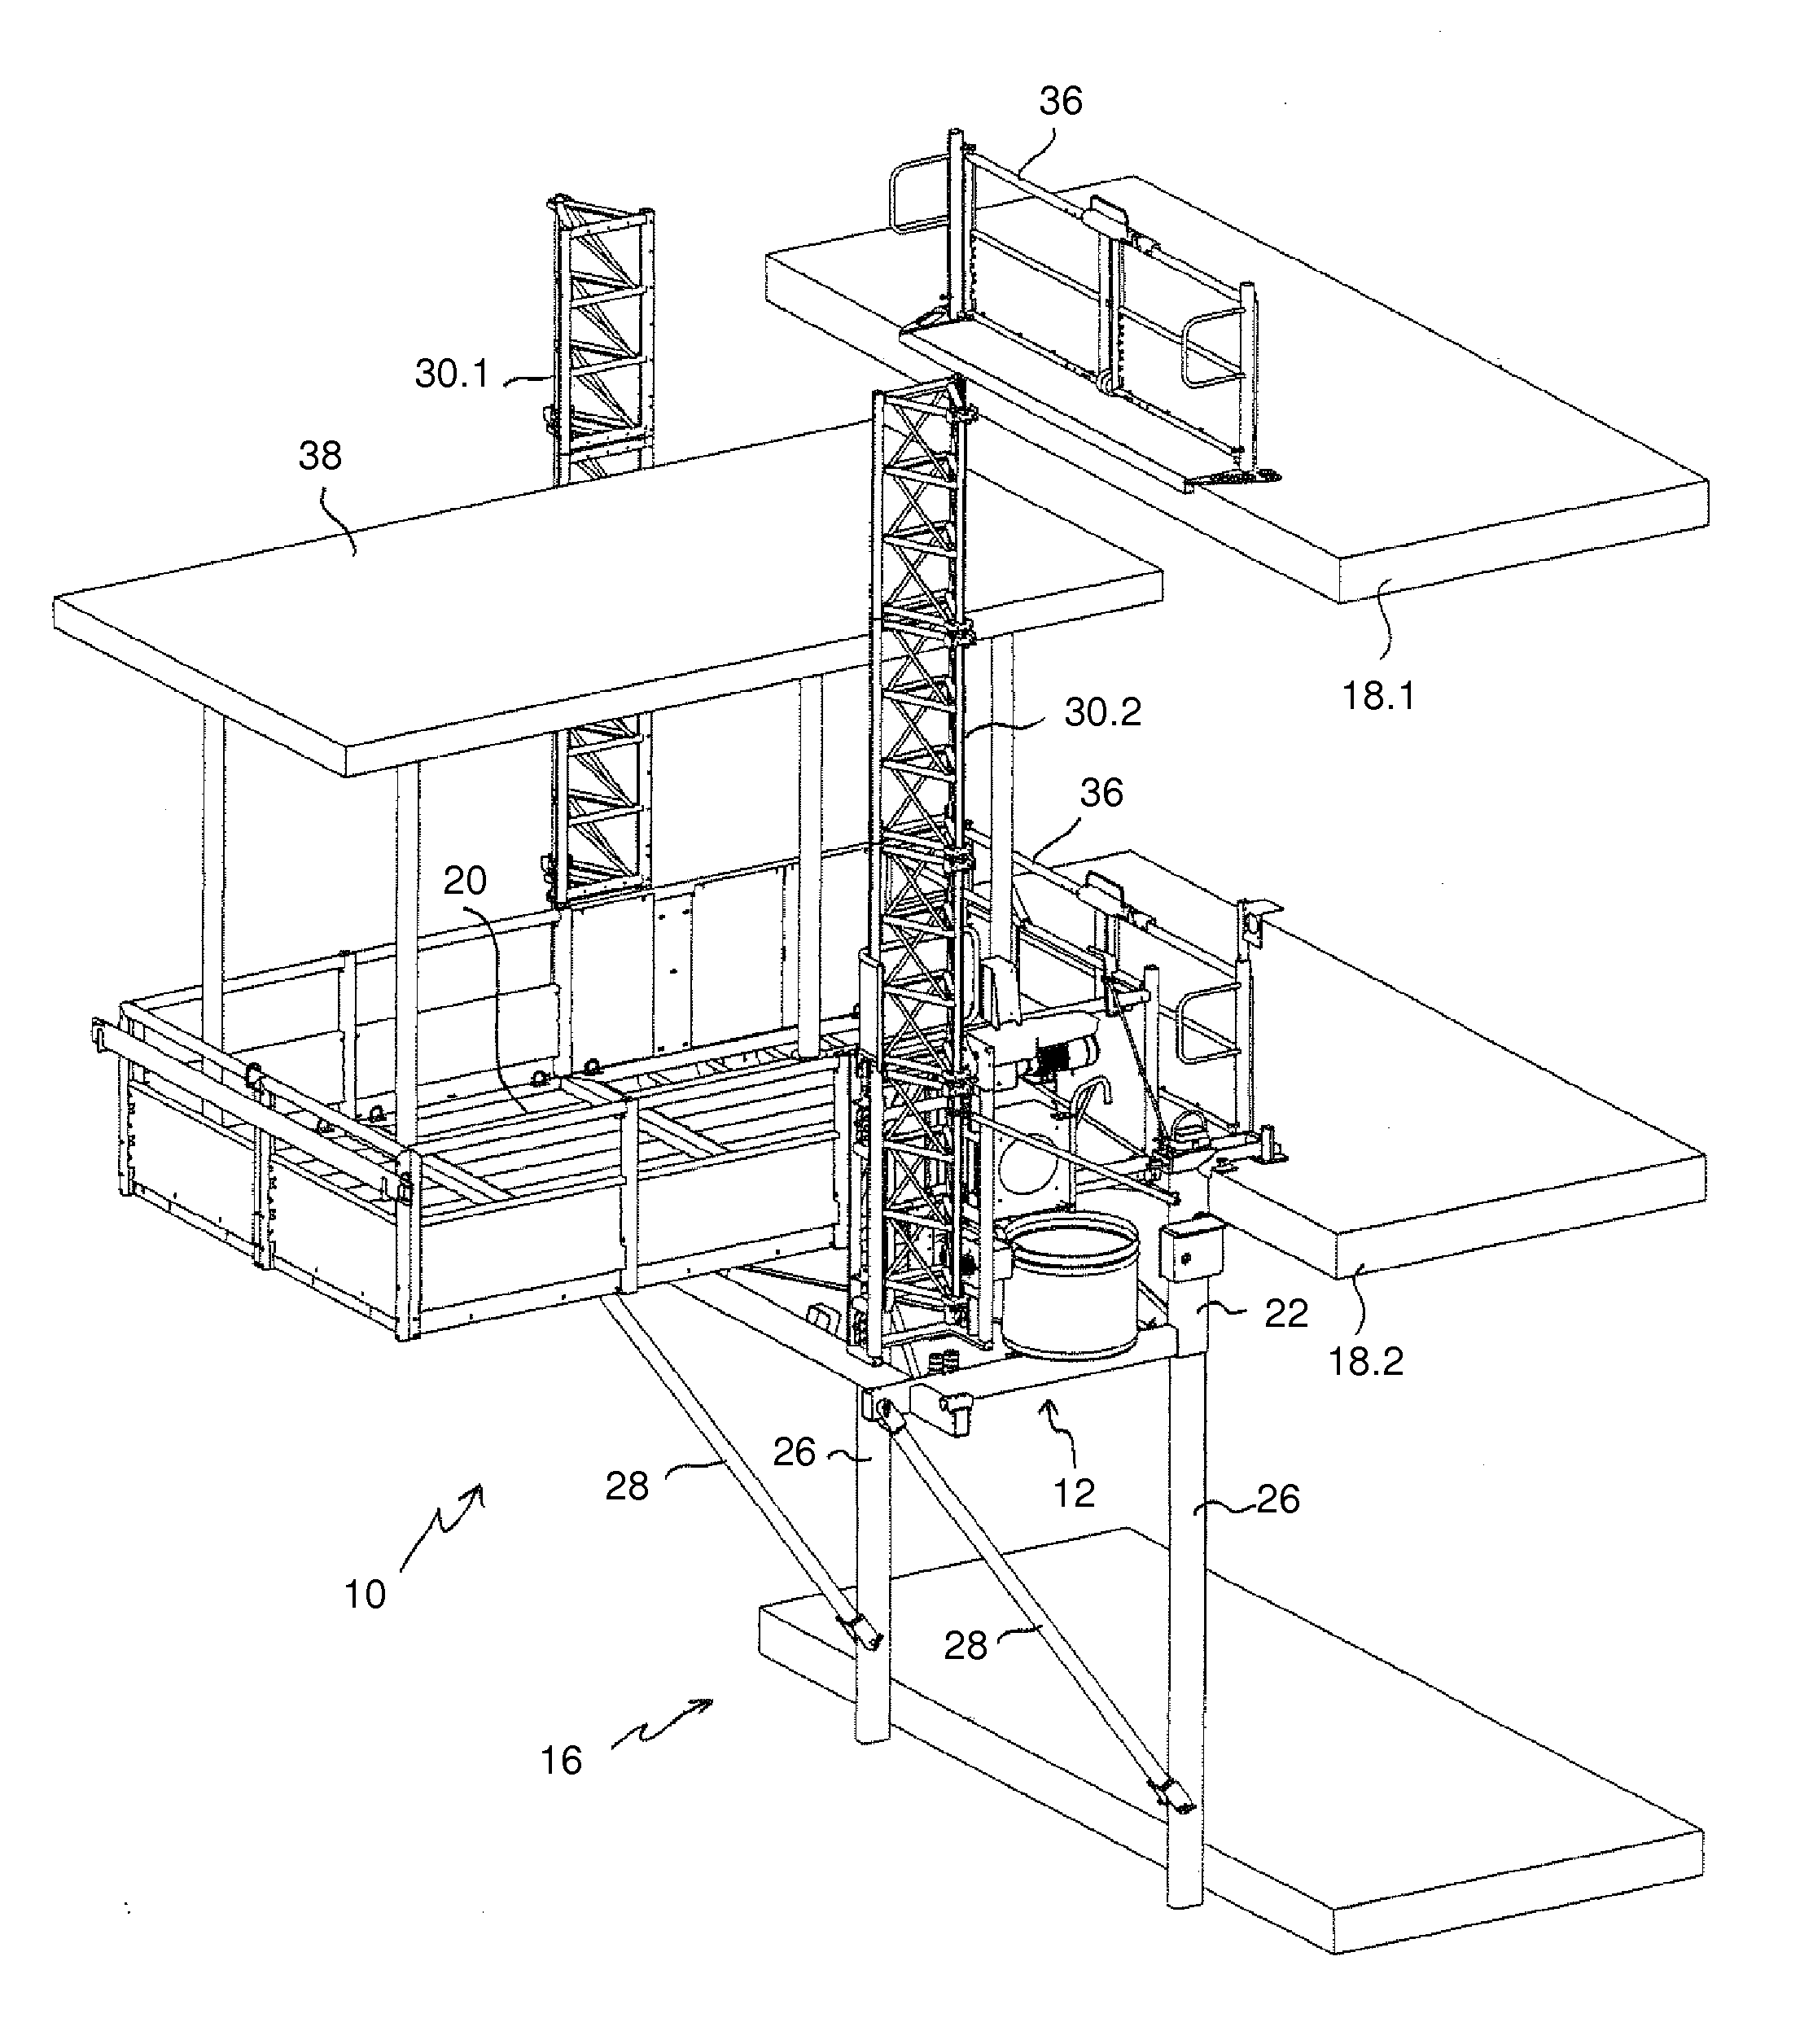 Lifting platform and method for setting up a lifting platform